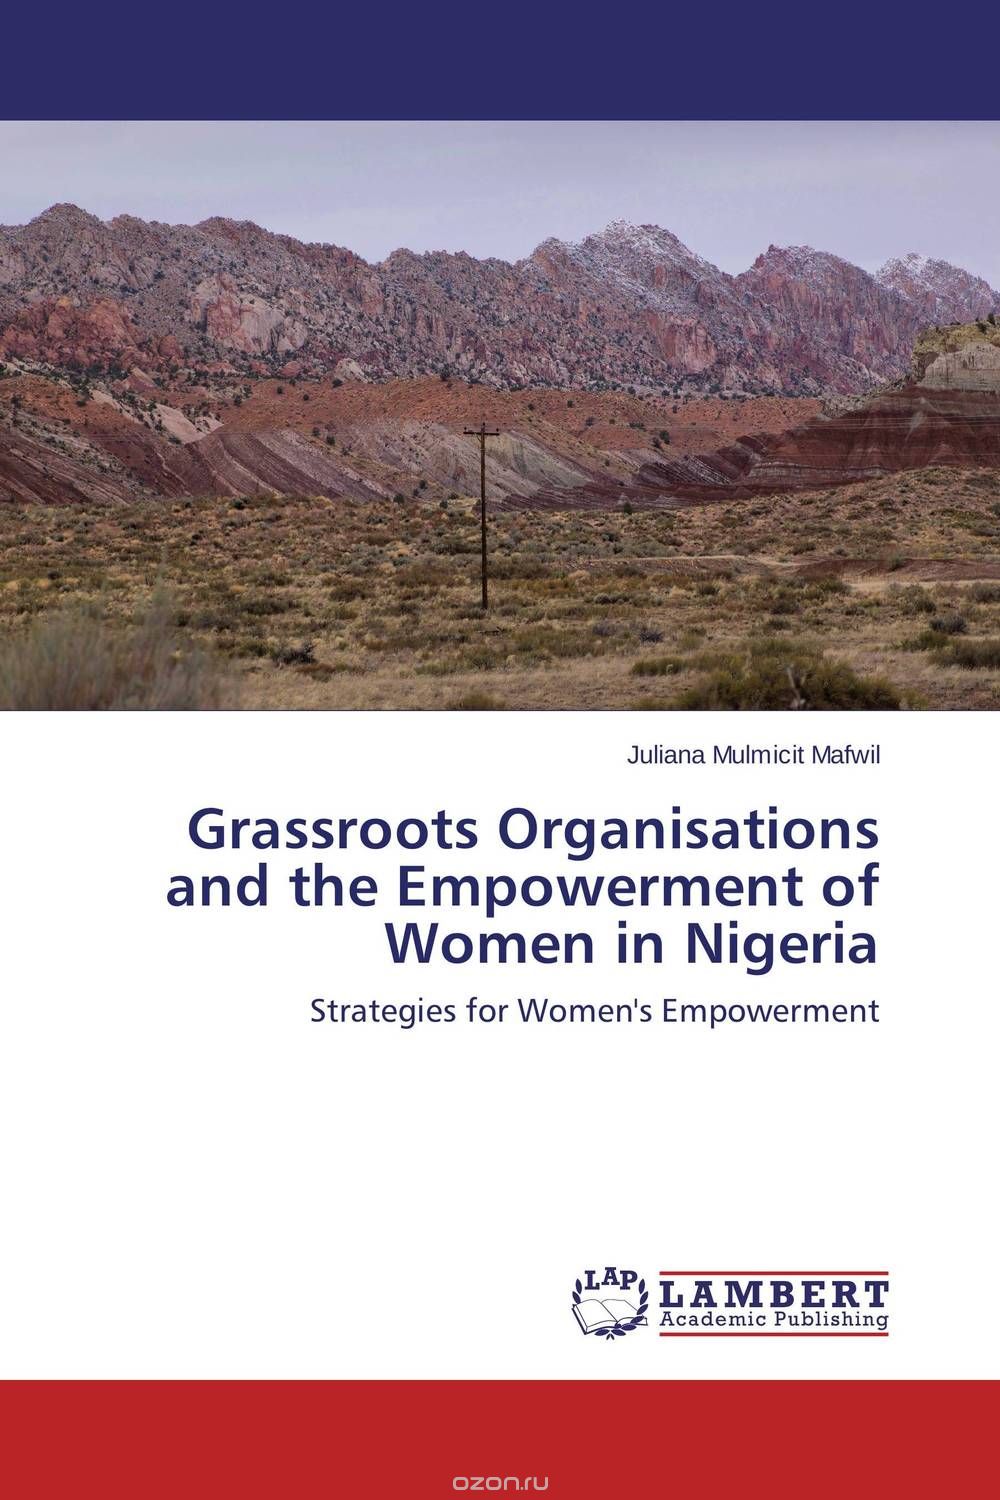 Скачать книгу "Grassroots Organisations and the Empowerment of Women in Nigeria"